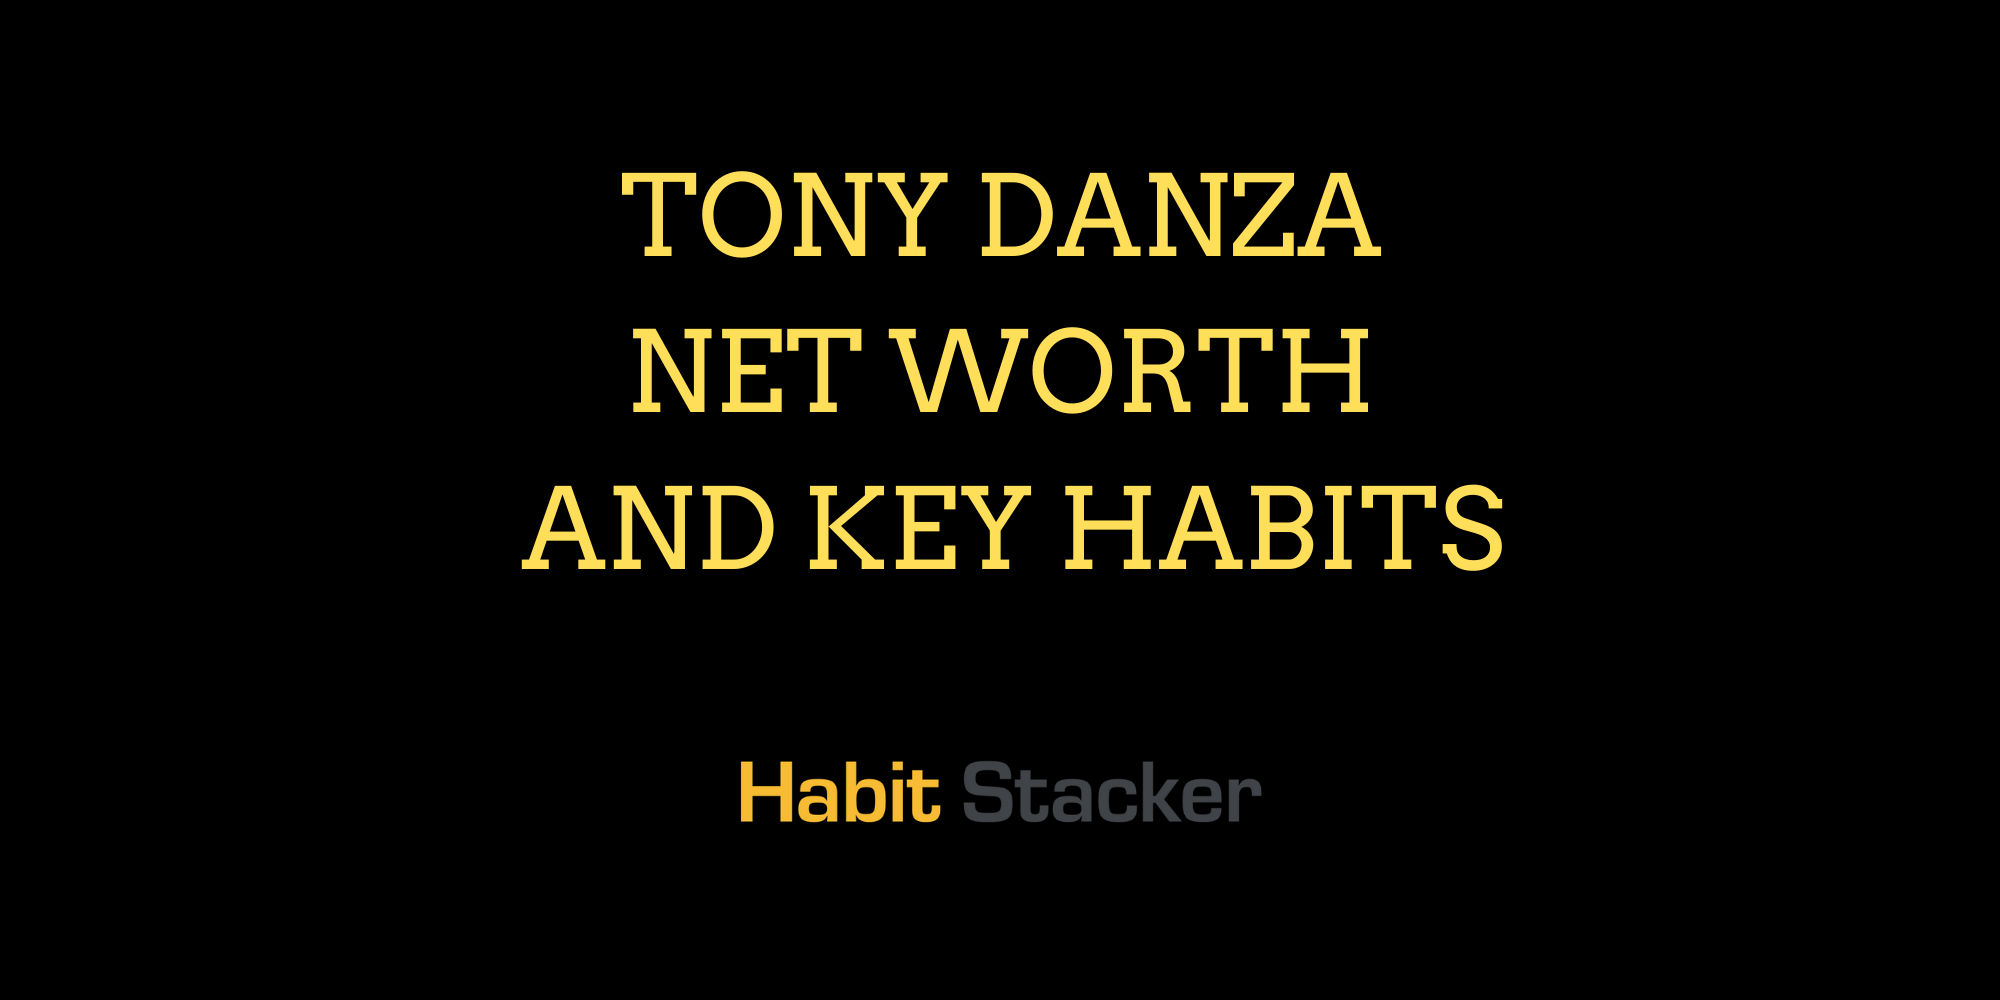 Tony Danza Net Worth and Key Habits